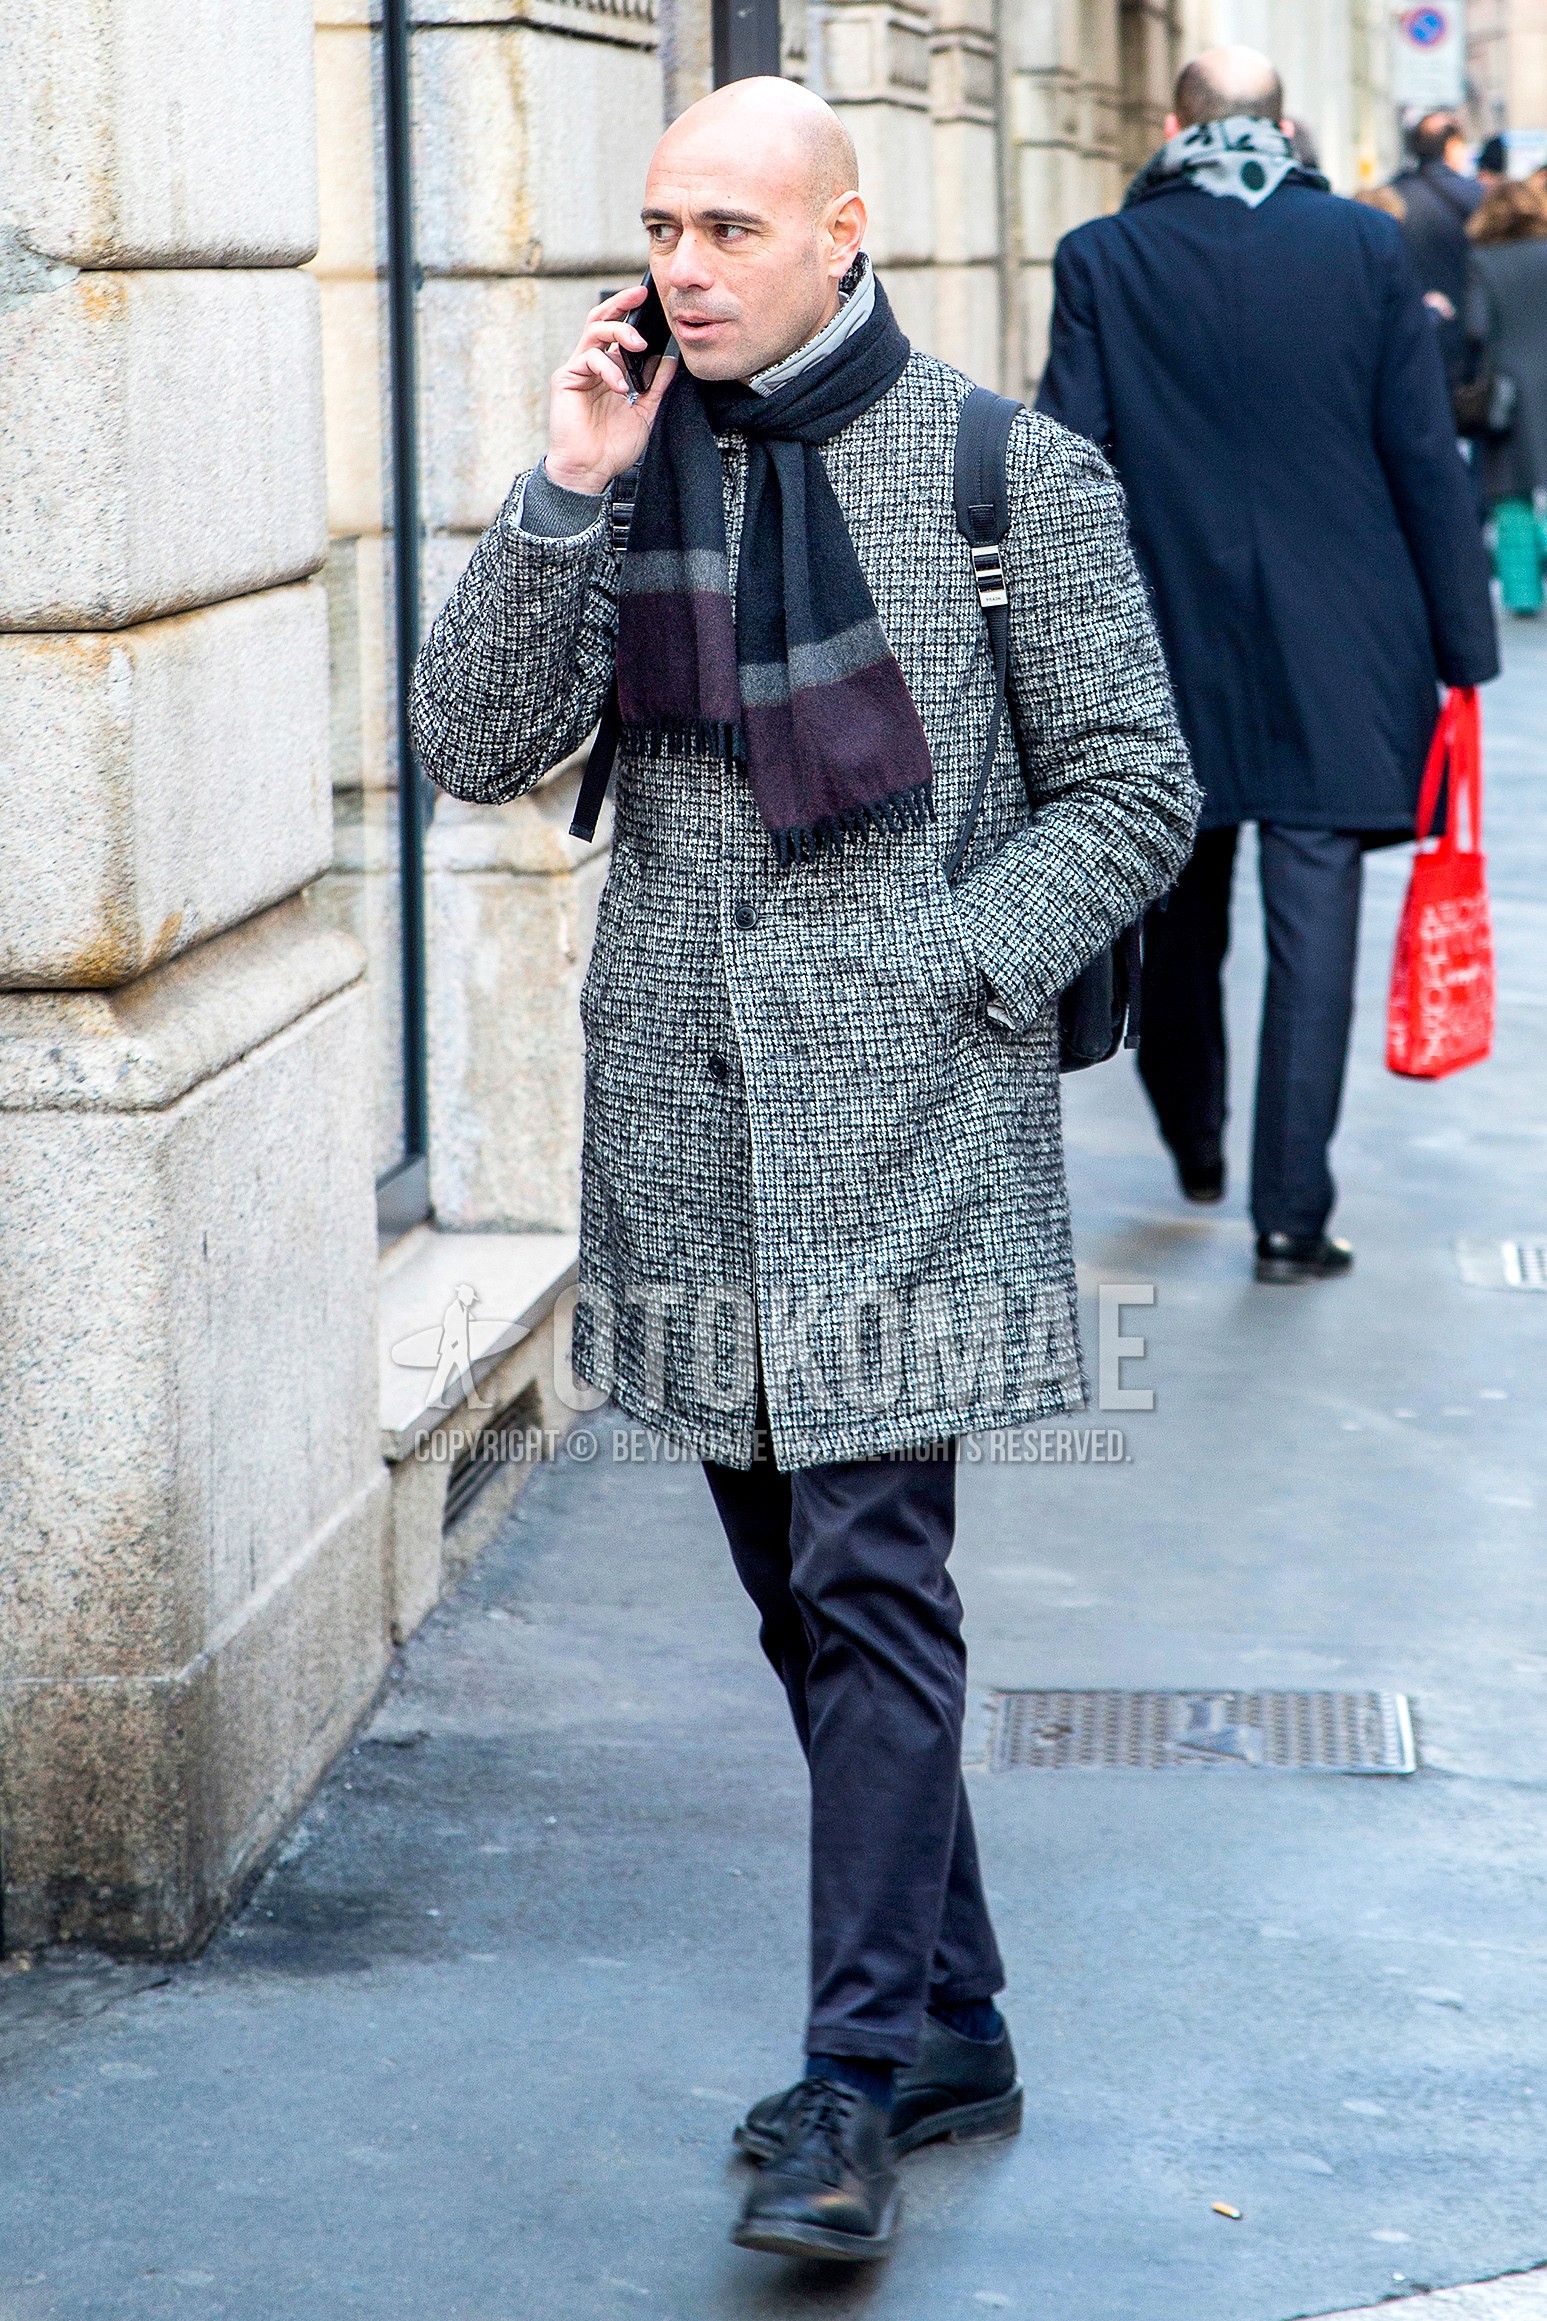 Men's winter outfit with dark gray plain scarf, gray check stenkarrer coat, gray plain chinos, navy plain socks, black plain toe leather shoes.